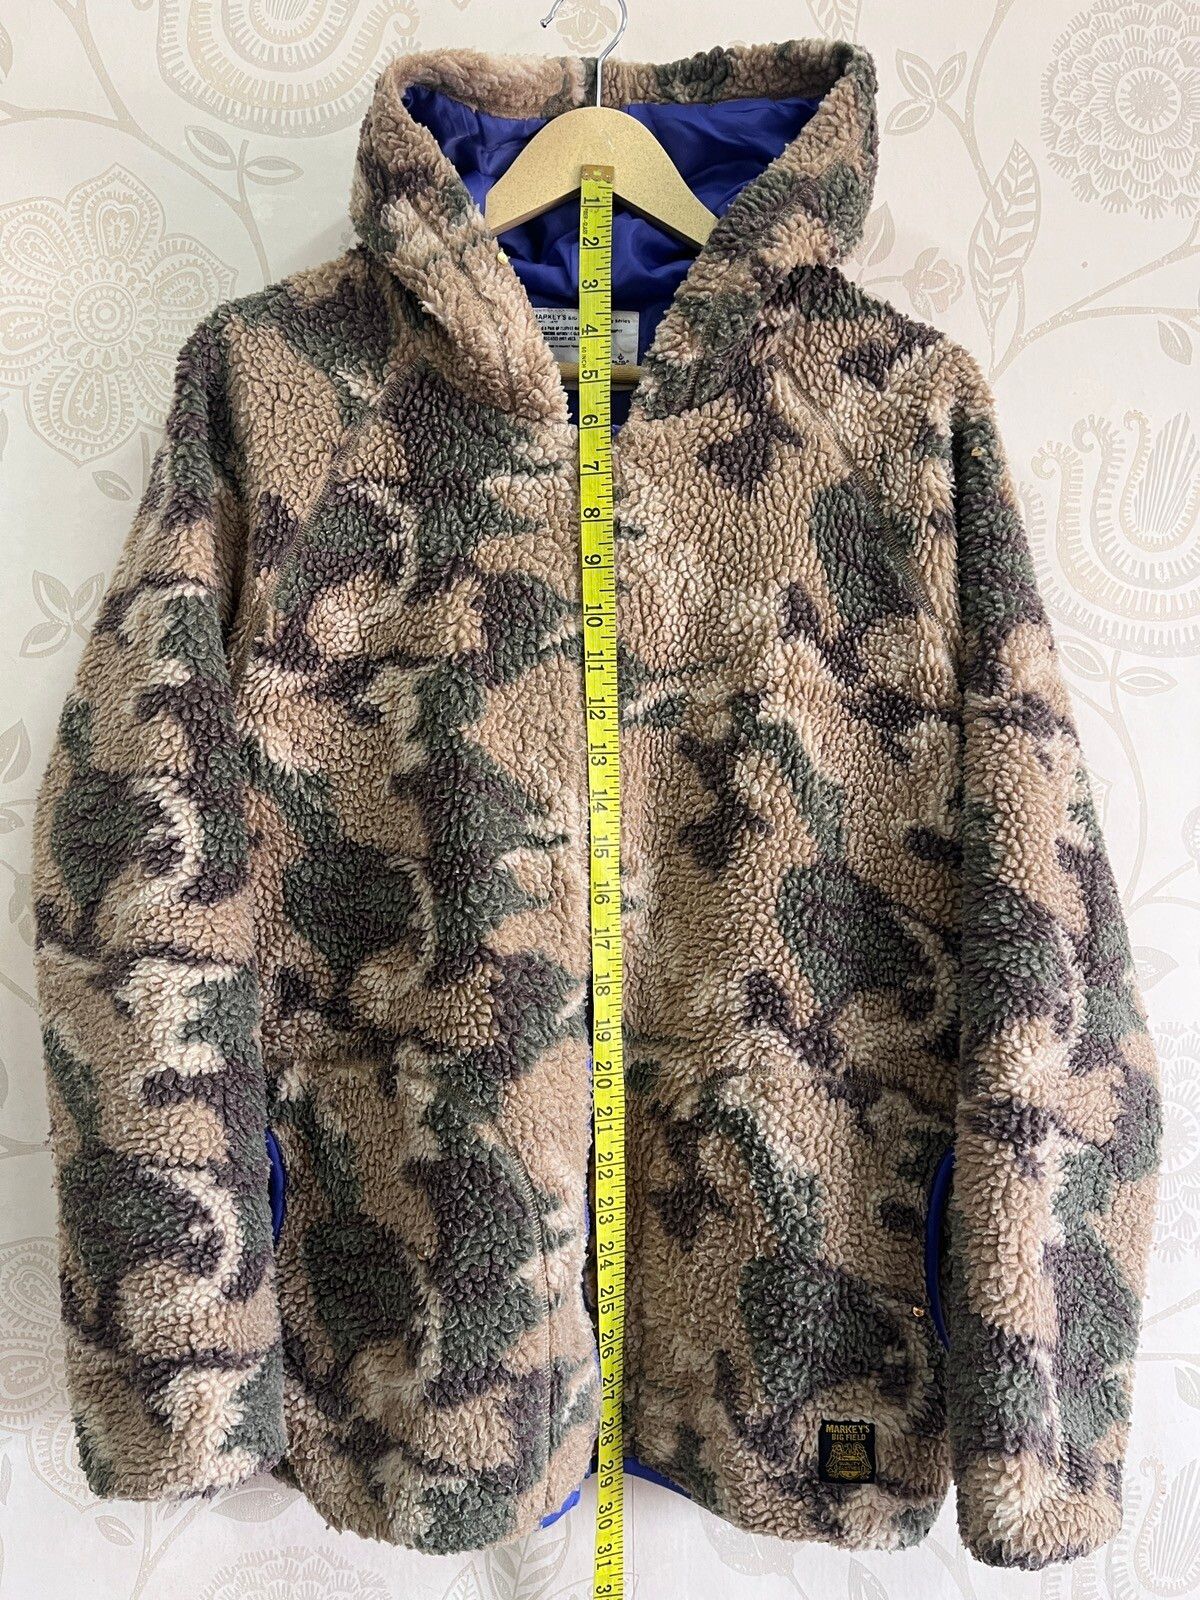 Military - Markey's Big Field Camouflage Sweater Hoodie Japanese - 2